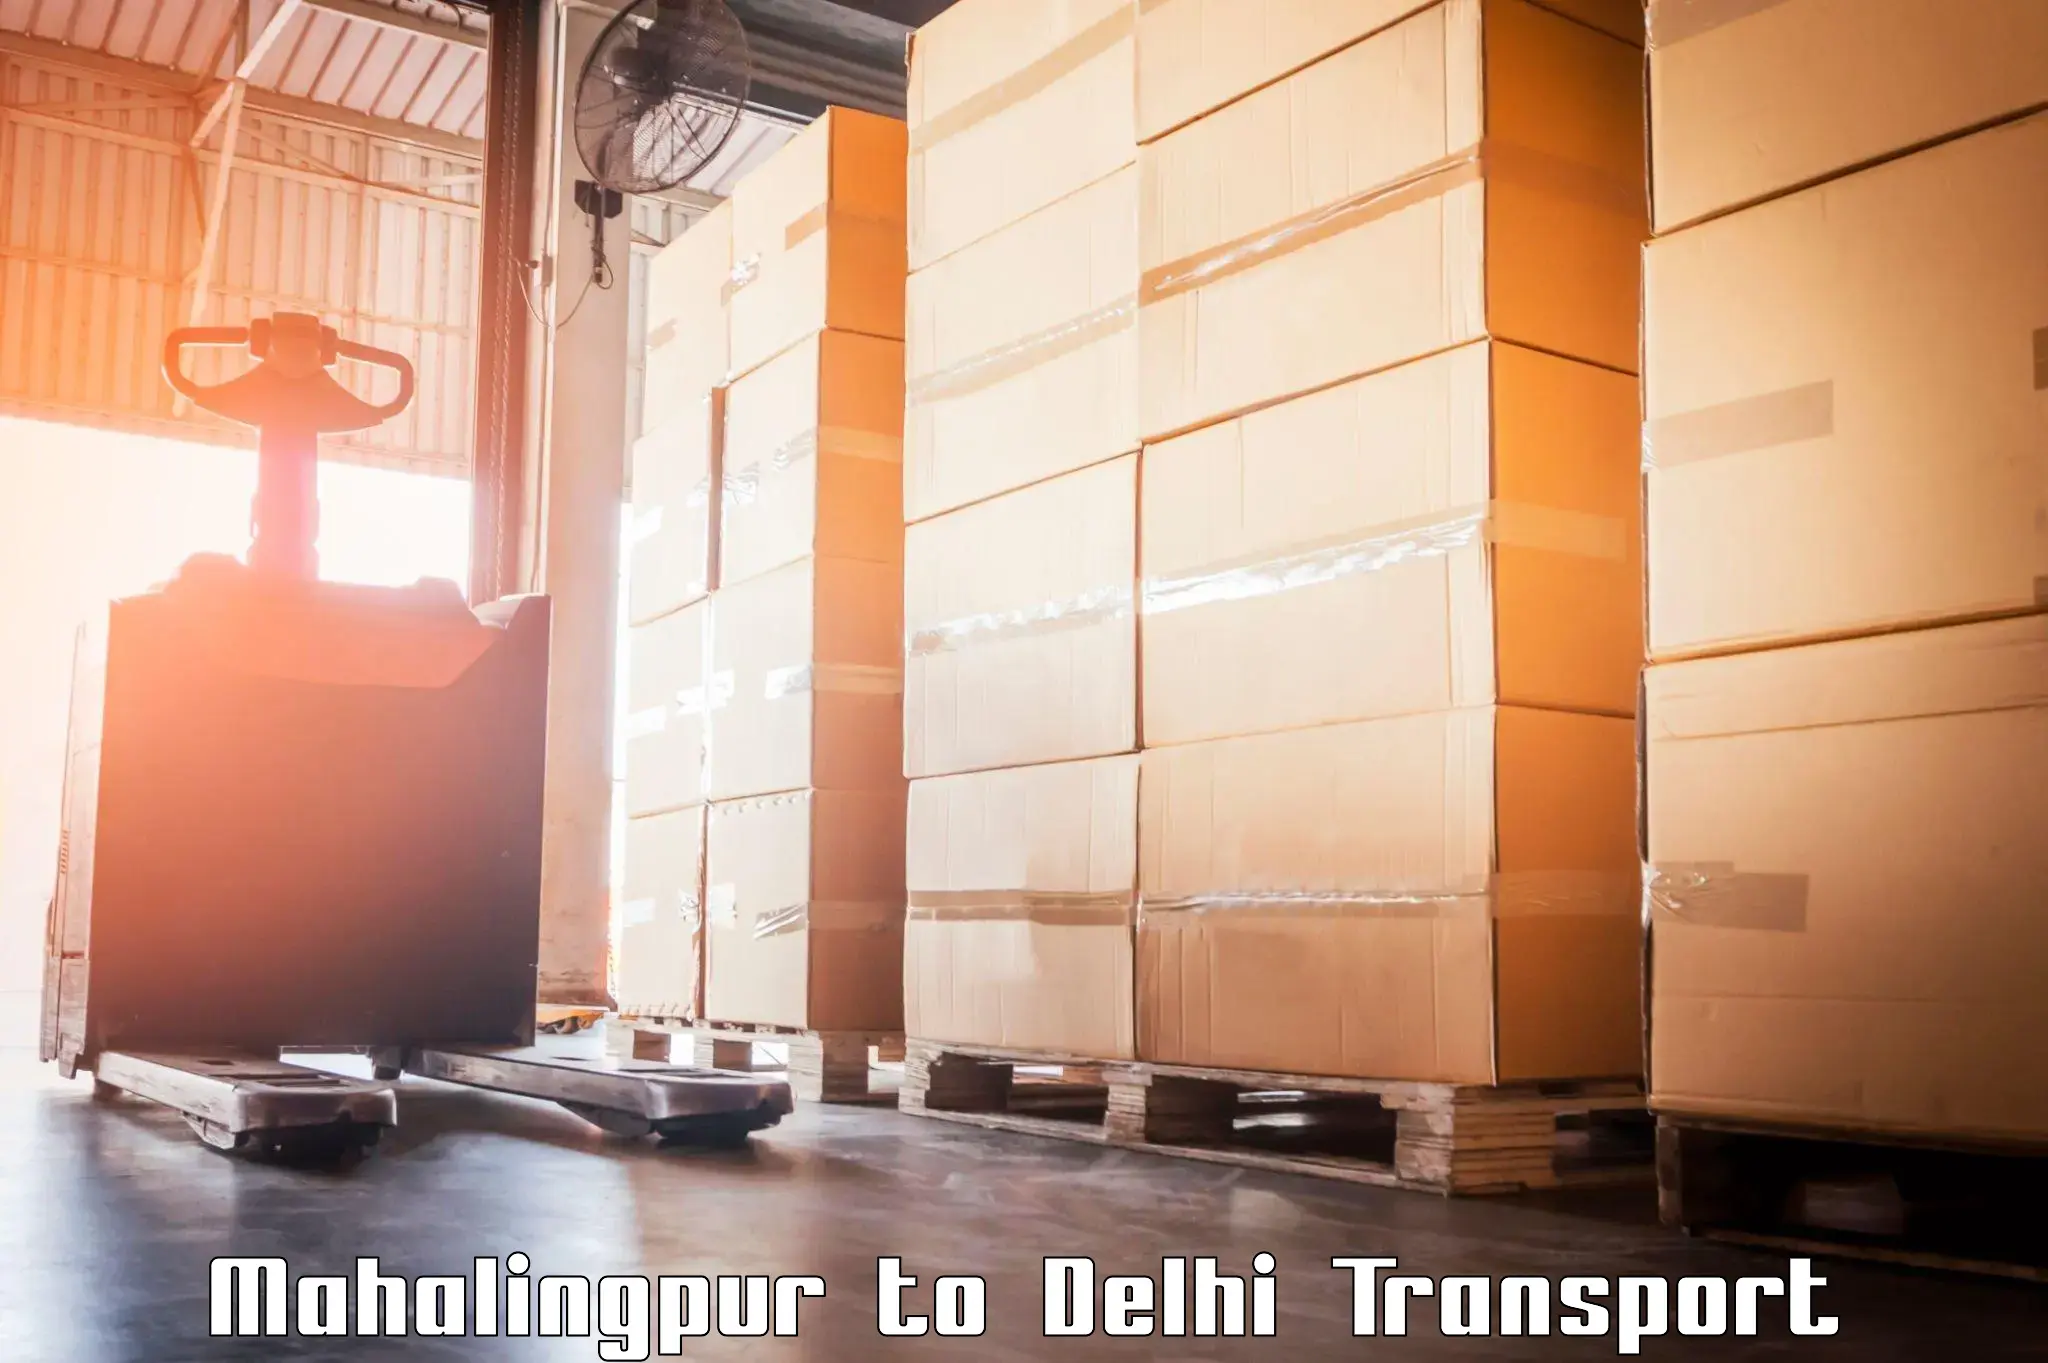 Sending bike to another city Mahalingpur to University of Delhi